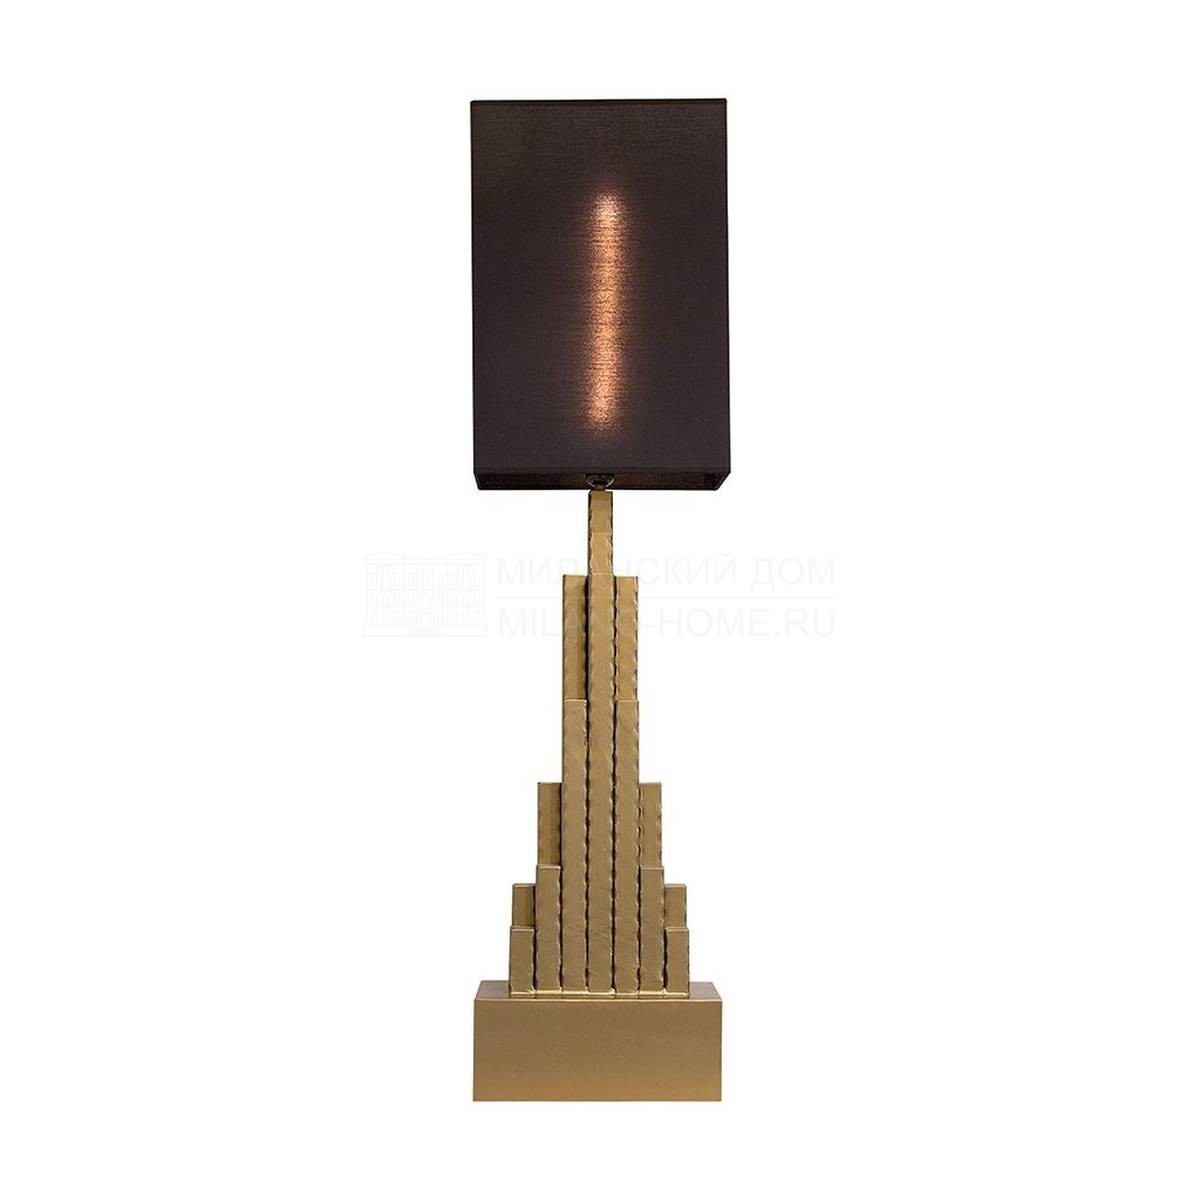 Настольная лампа H-70585 table lamp из Испании фабрики GUADARTE